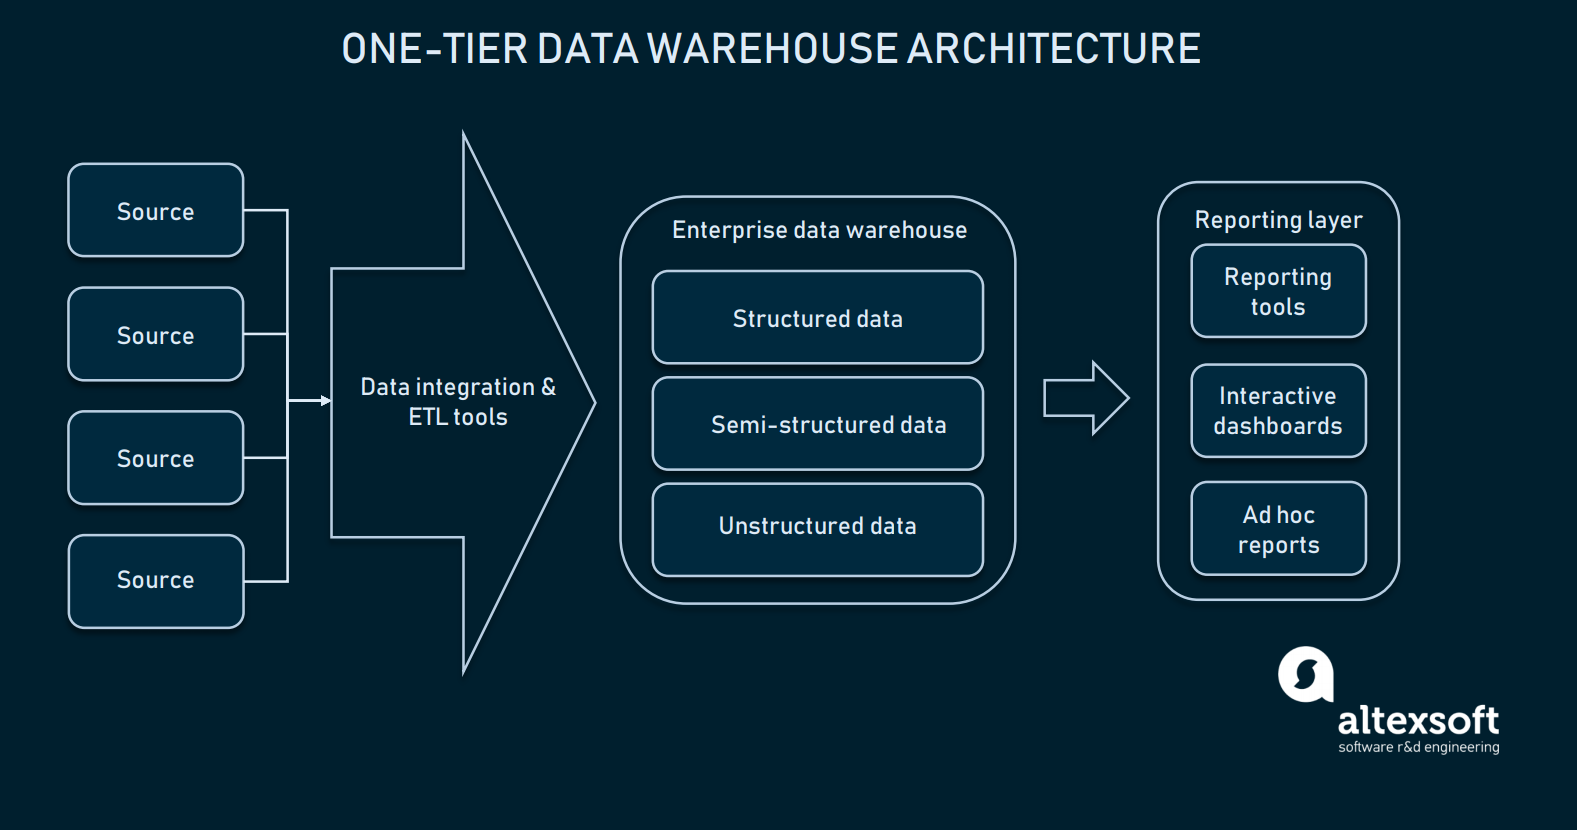 One-tier data warehouse architecture 